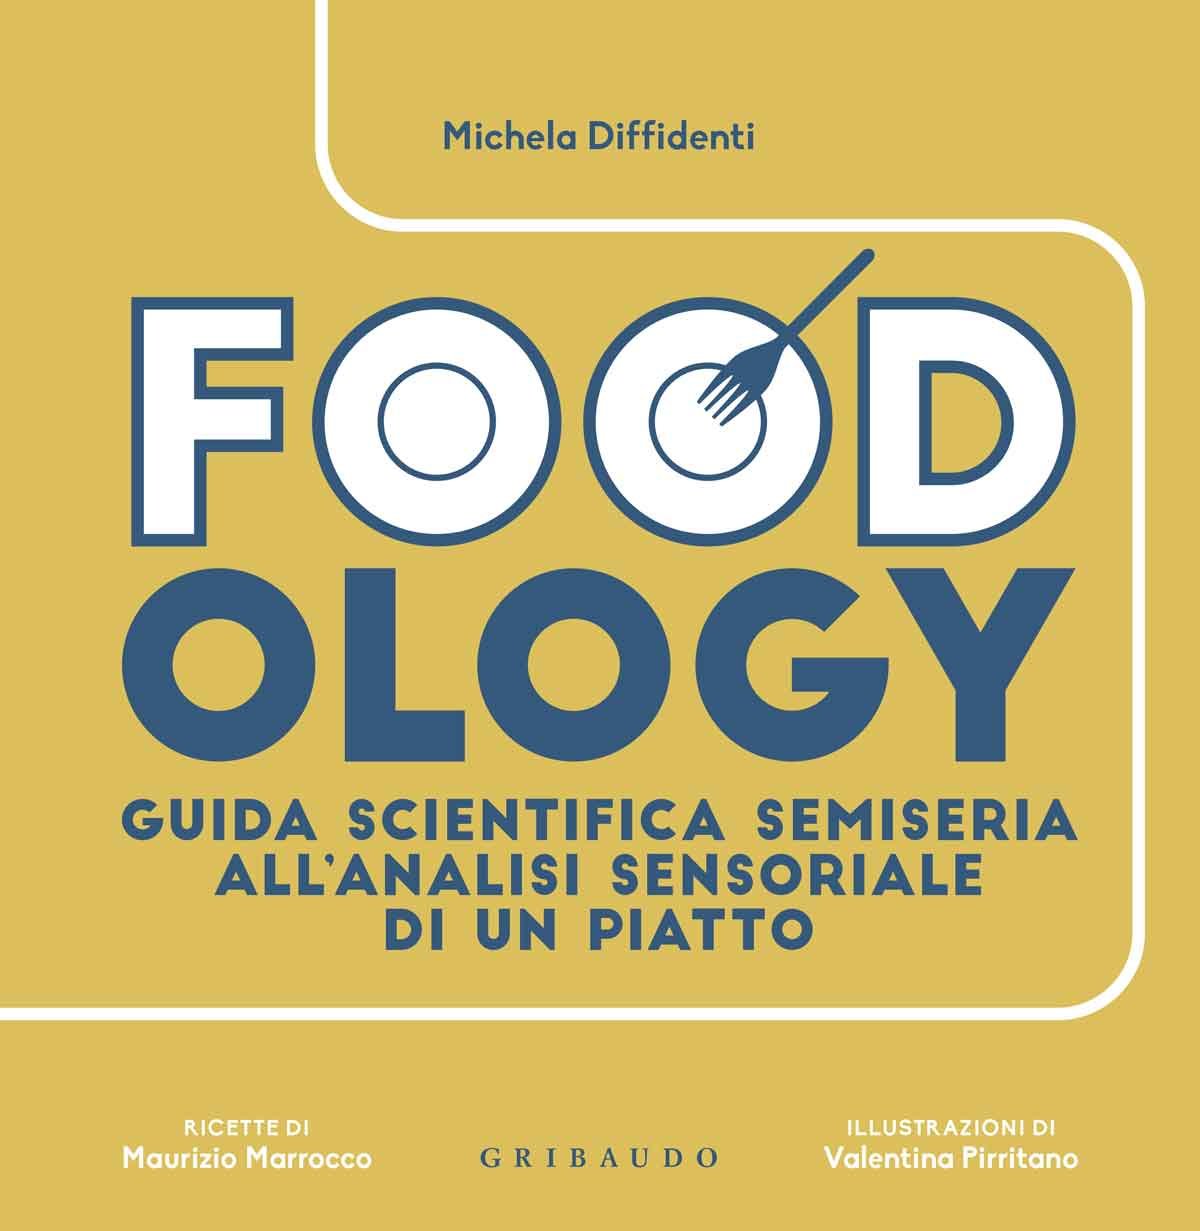 Gold Food Company: Foodology